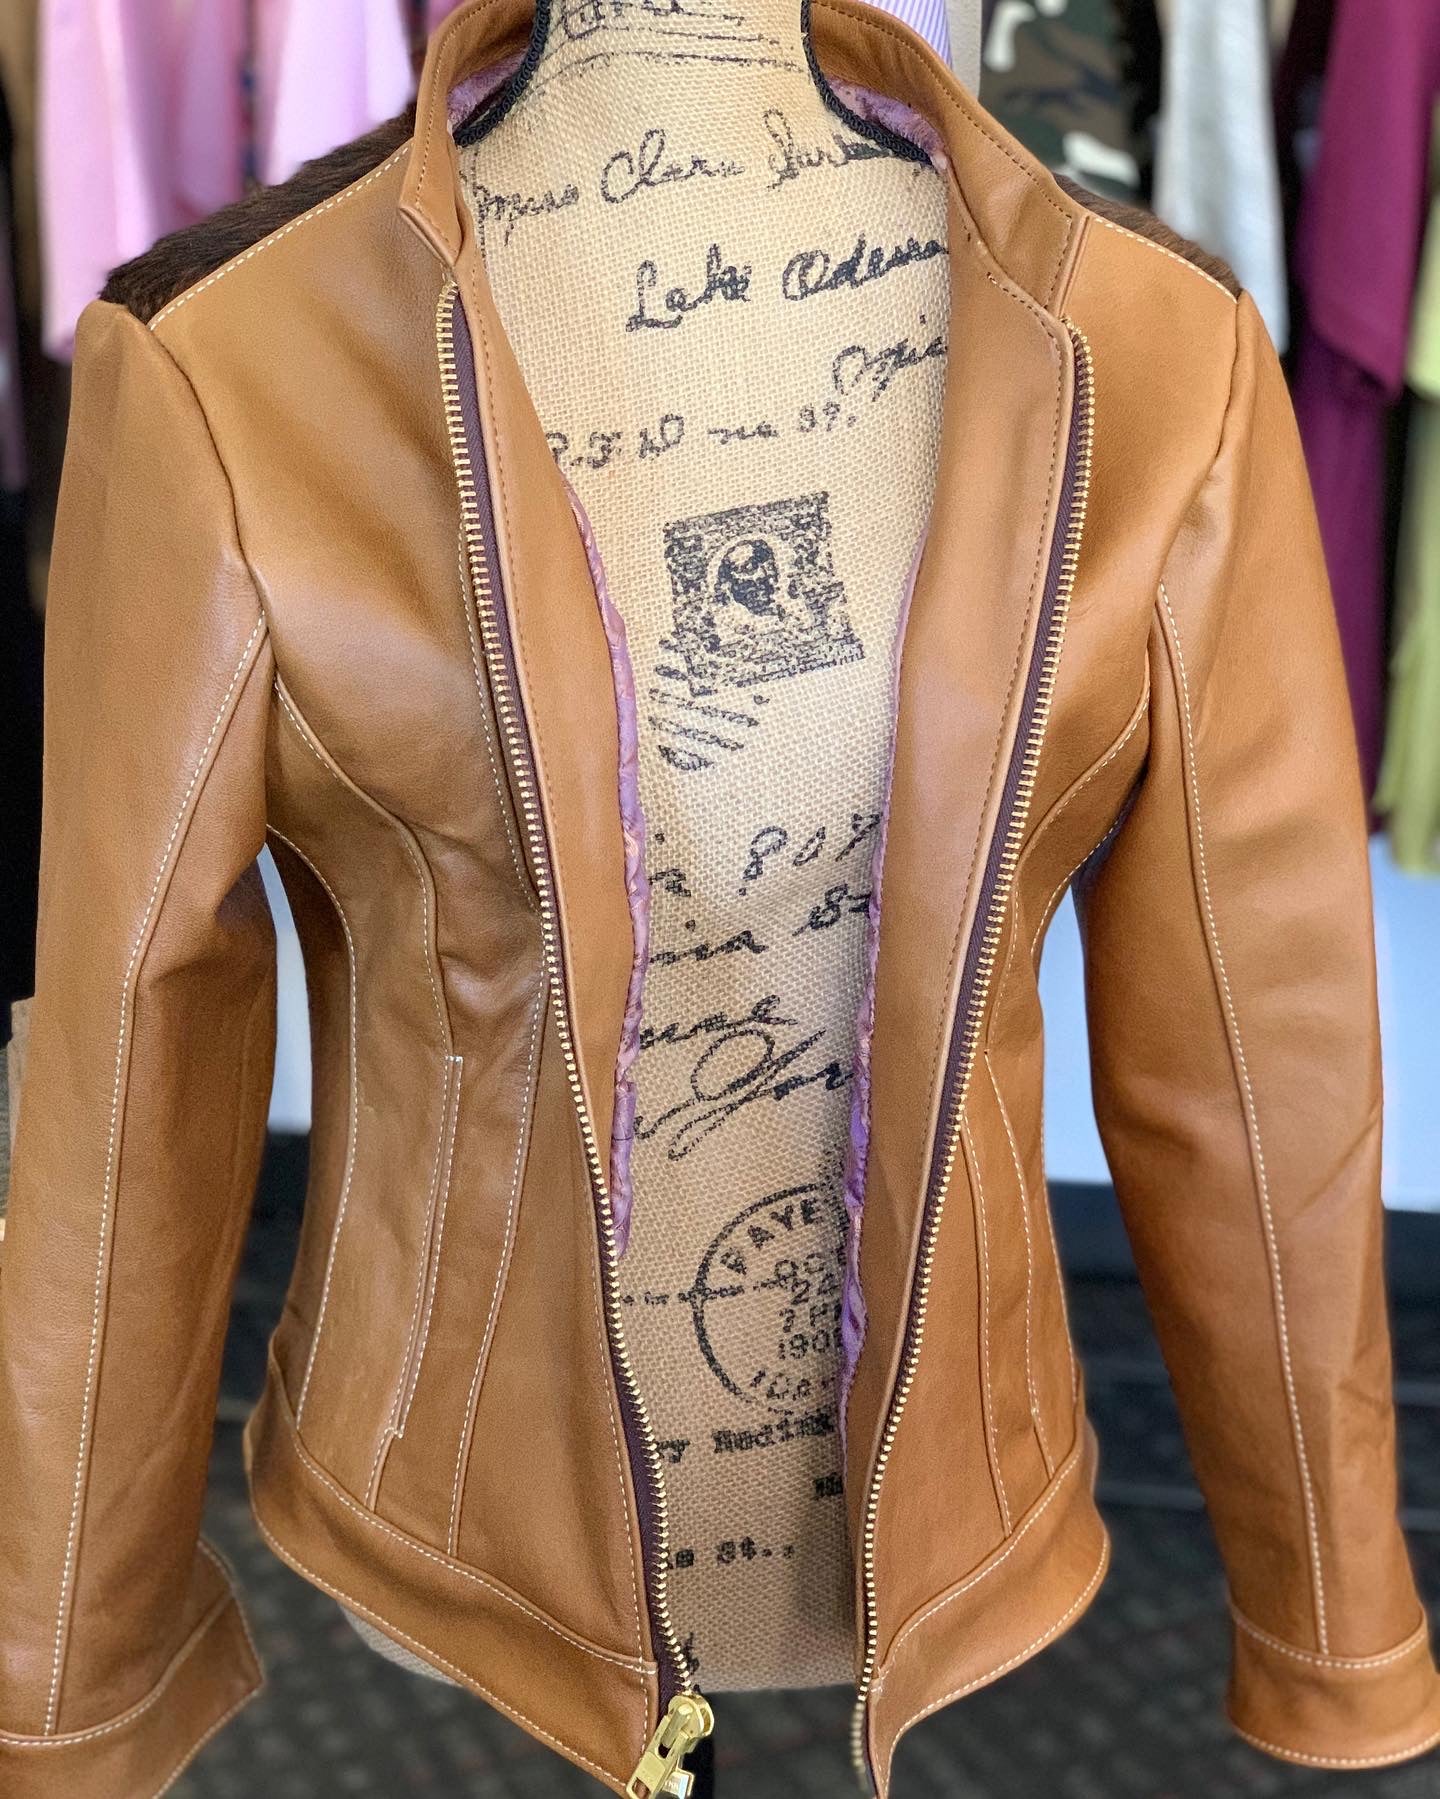 The Mari Lou leather jacket